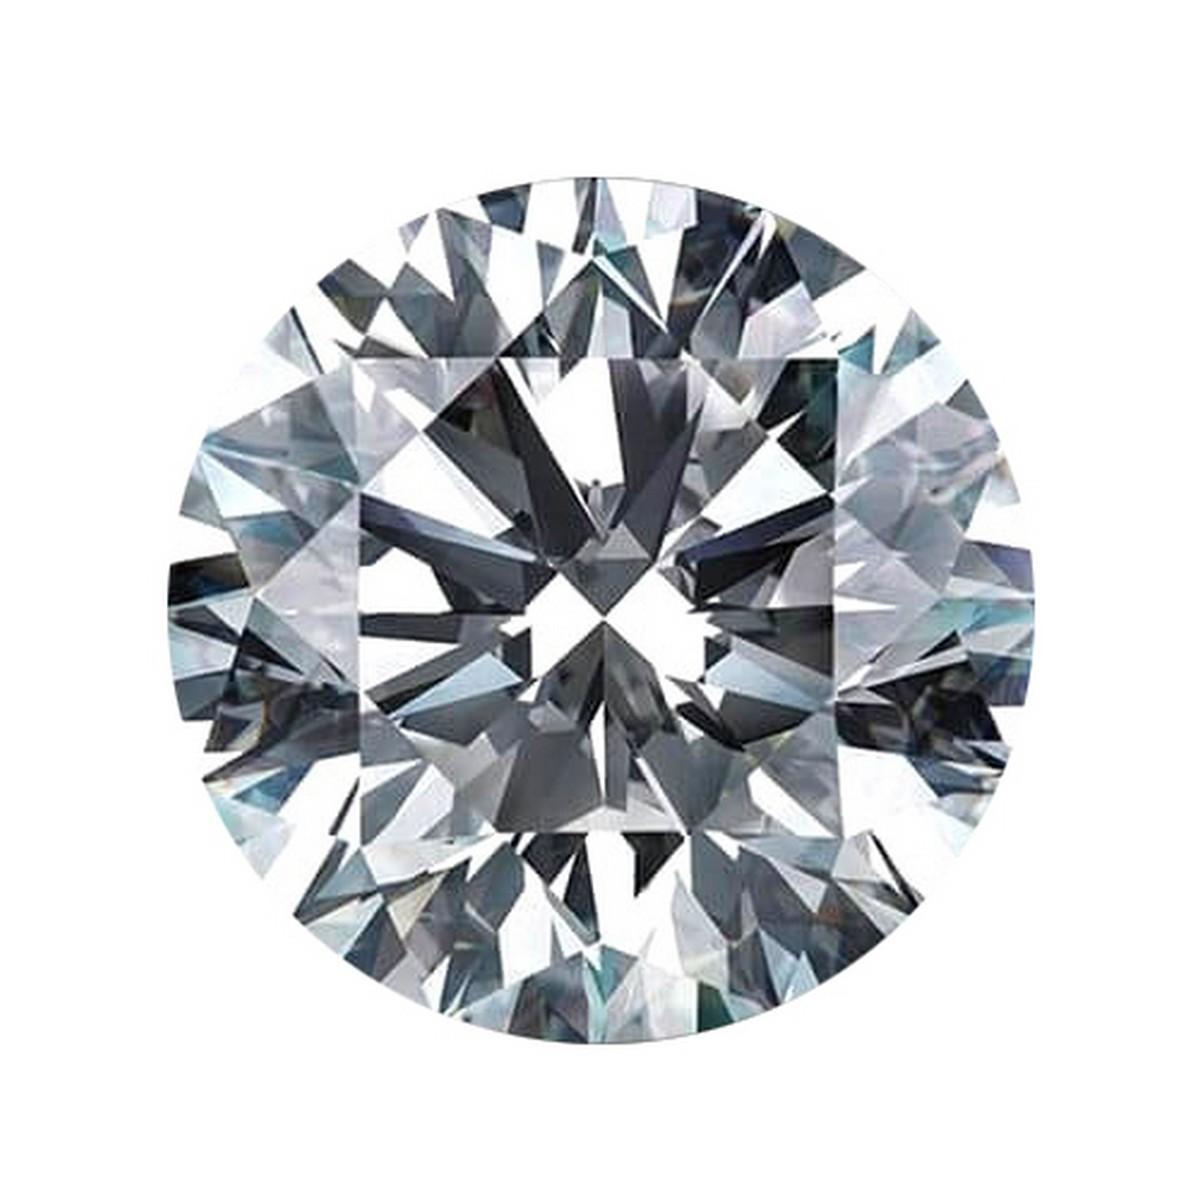 11.03 ctw. VVS2 IGI Certified Round Cut Loose Diamond (LAB GROWN)